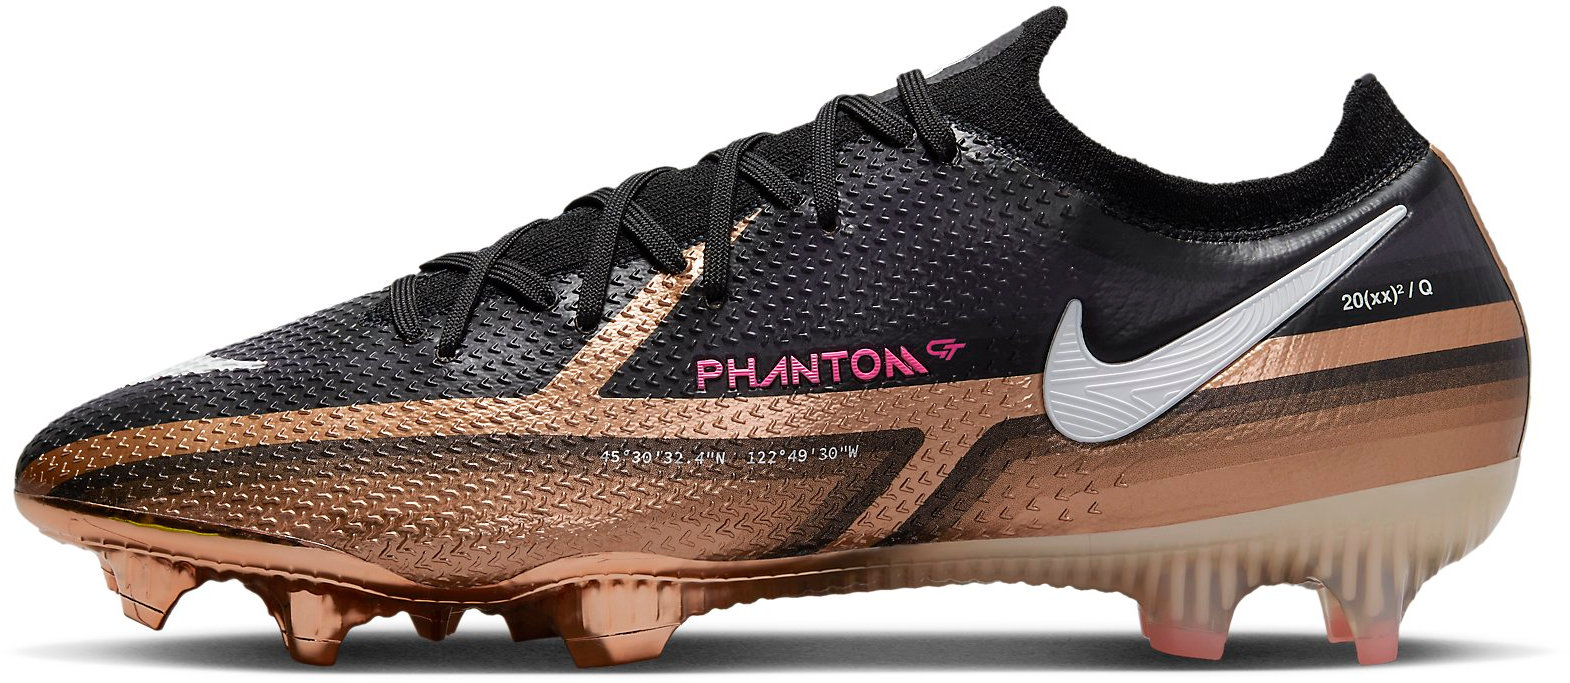 Voetbalschoenen Nike PHANTOM GT2 ELITE FG